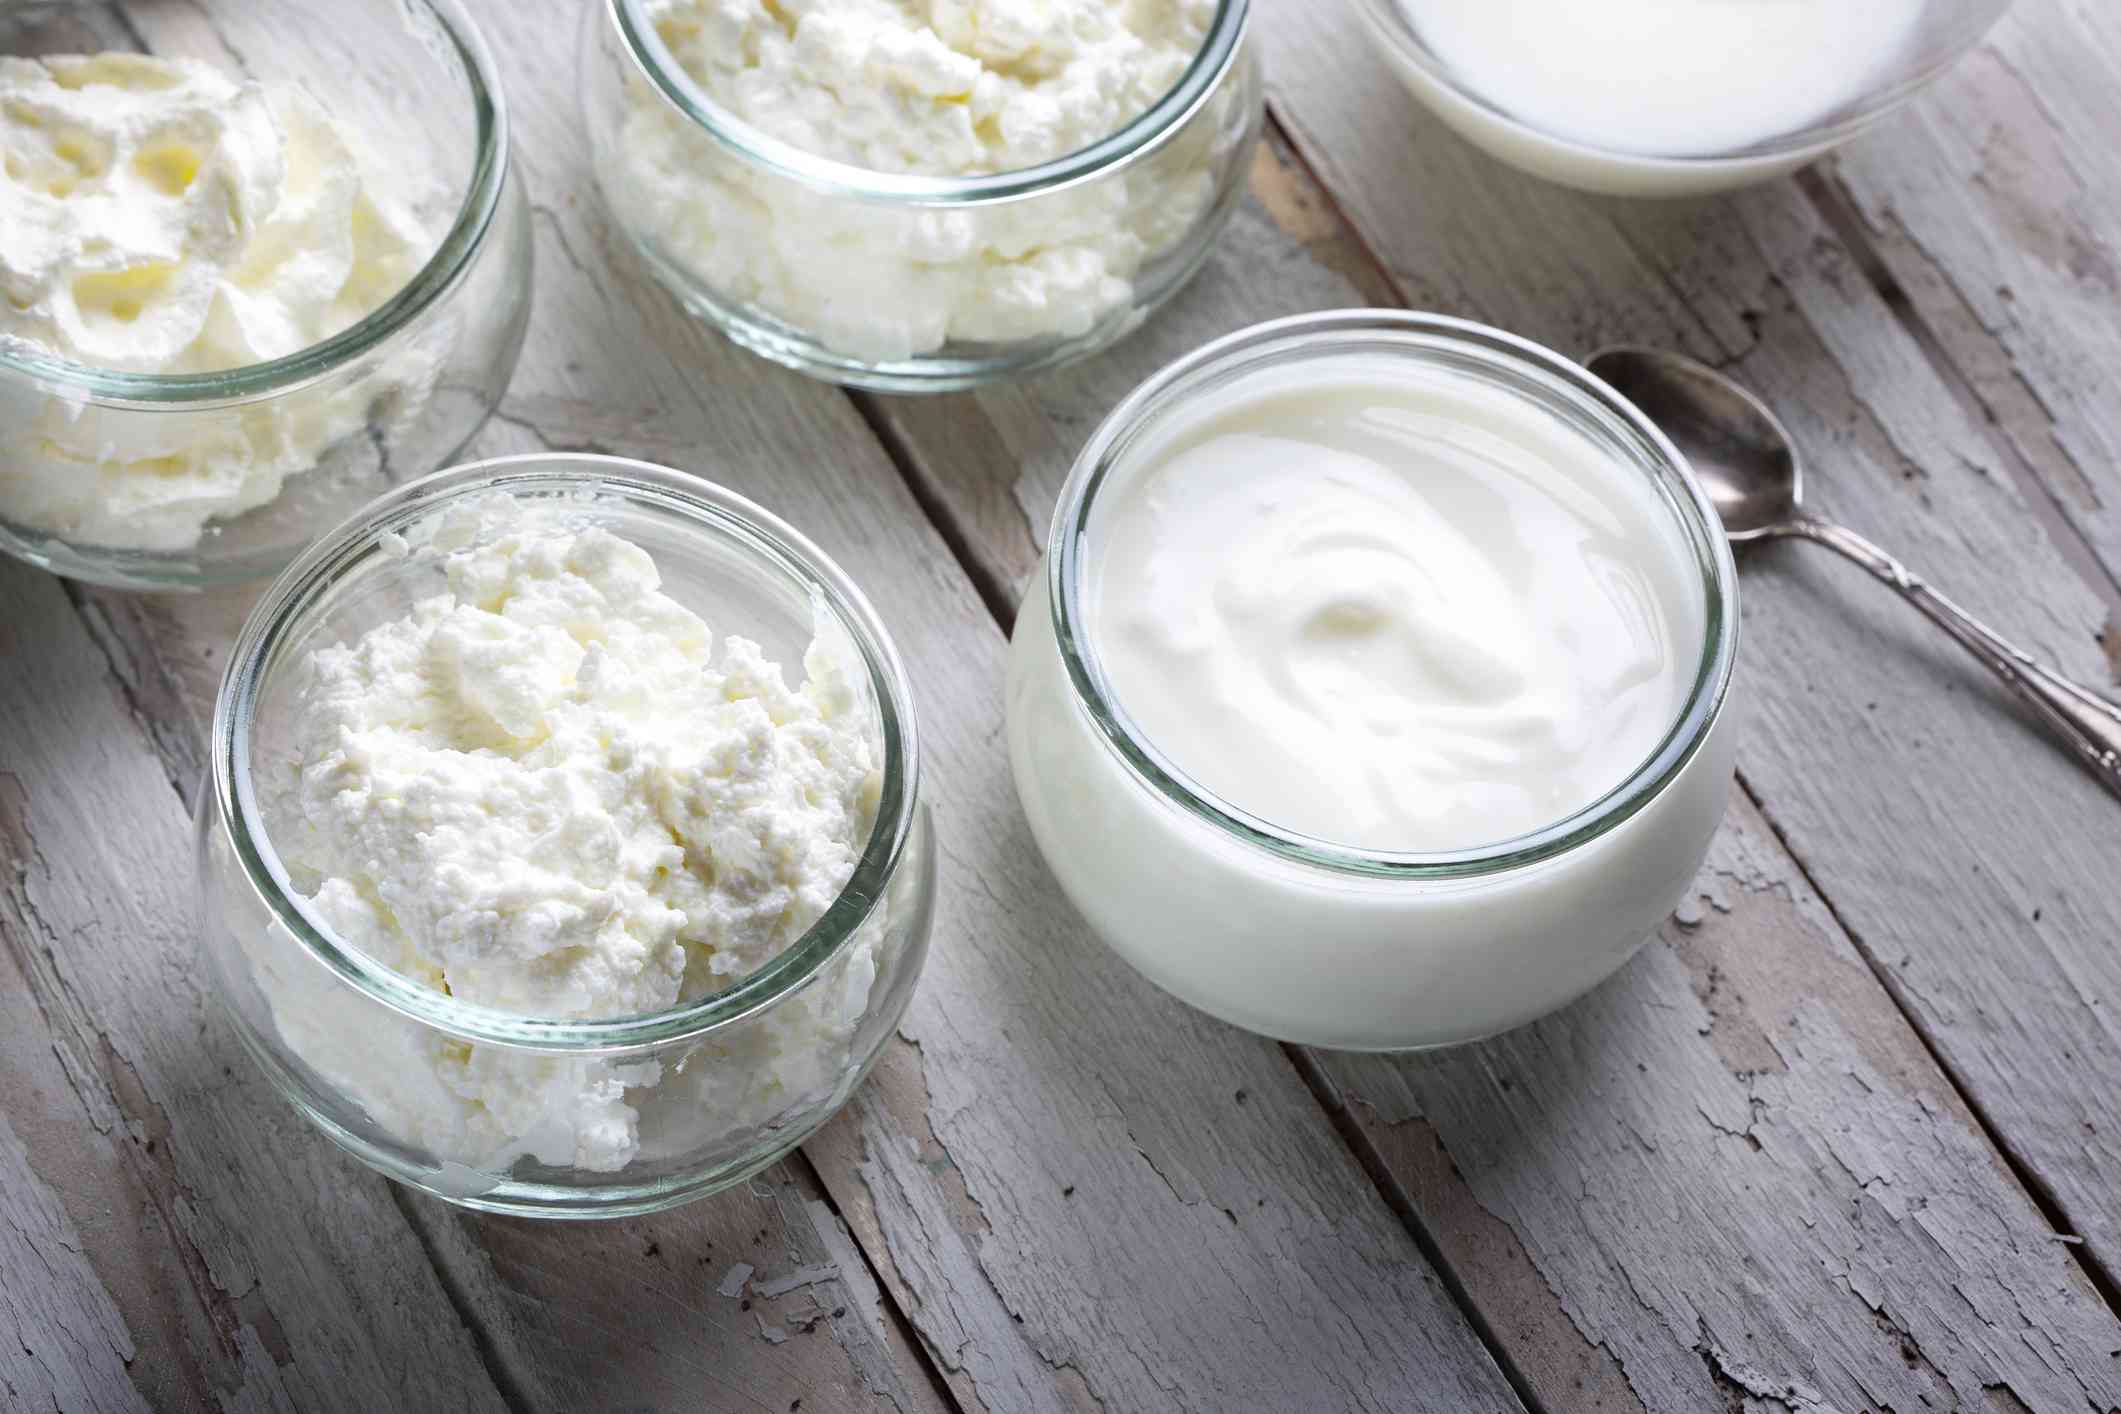 Is Kefir Healthier Than Yogurt? A Dietitian Weighs In